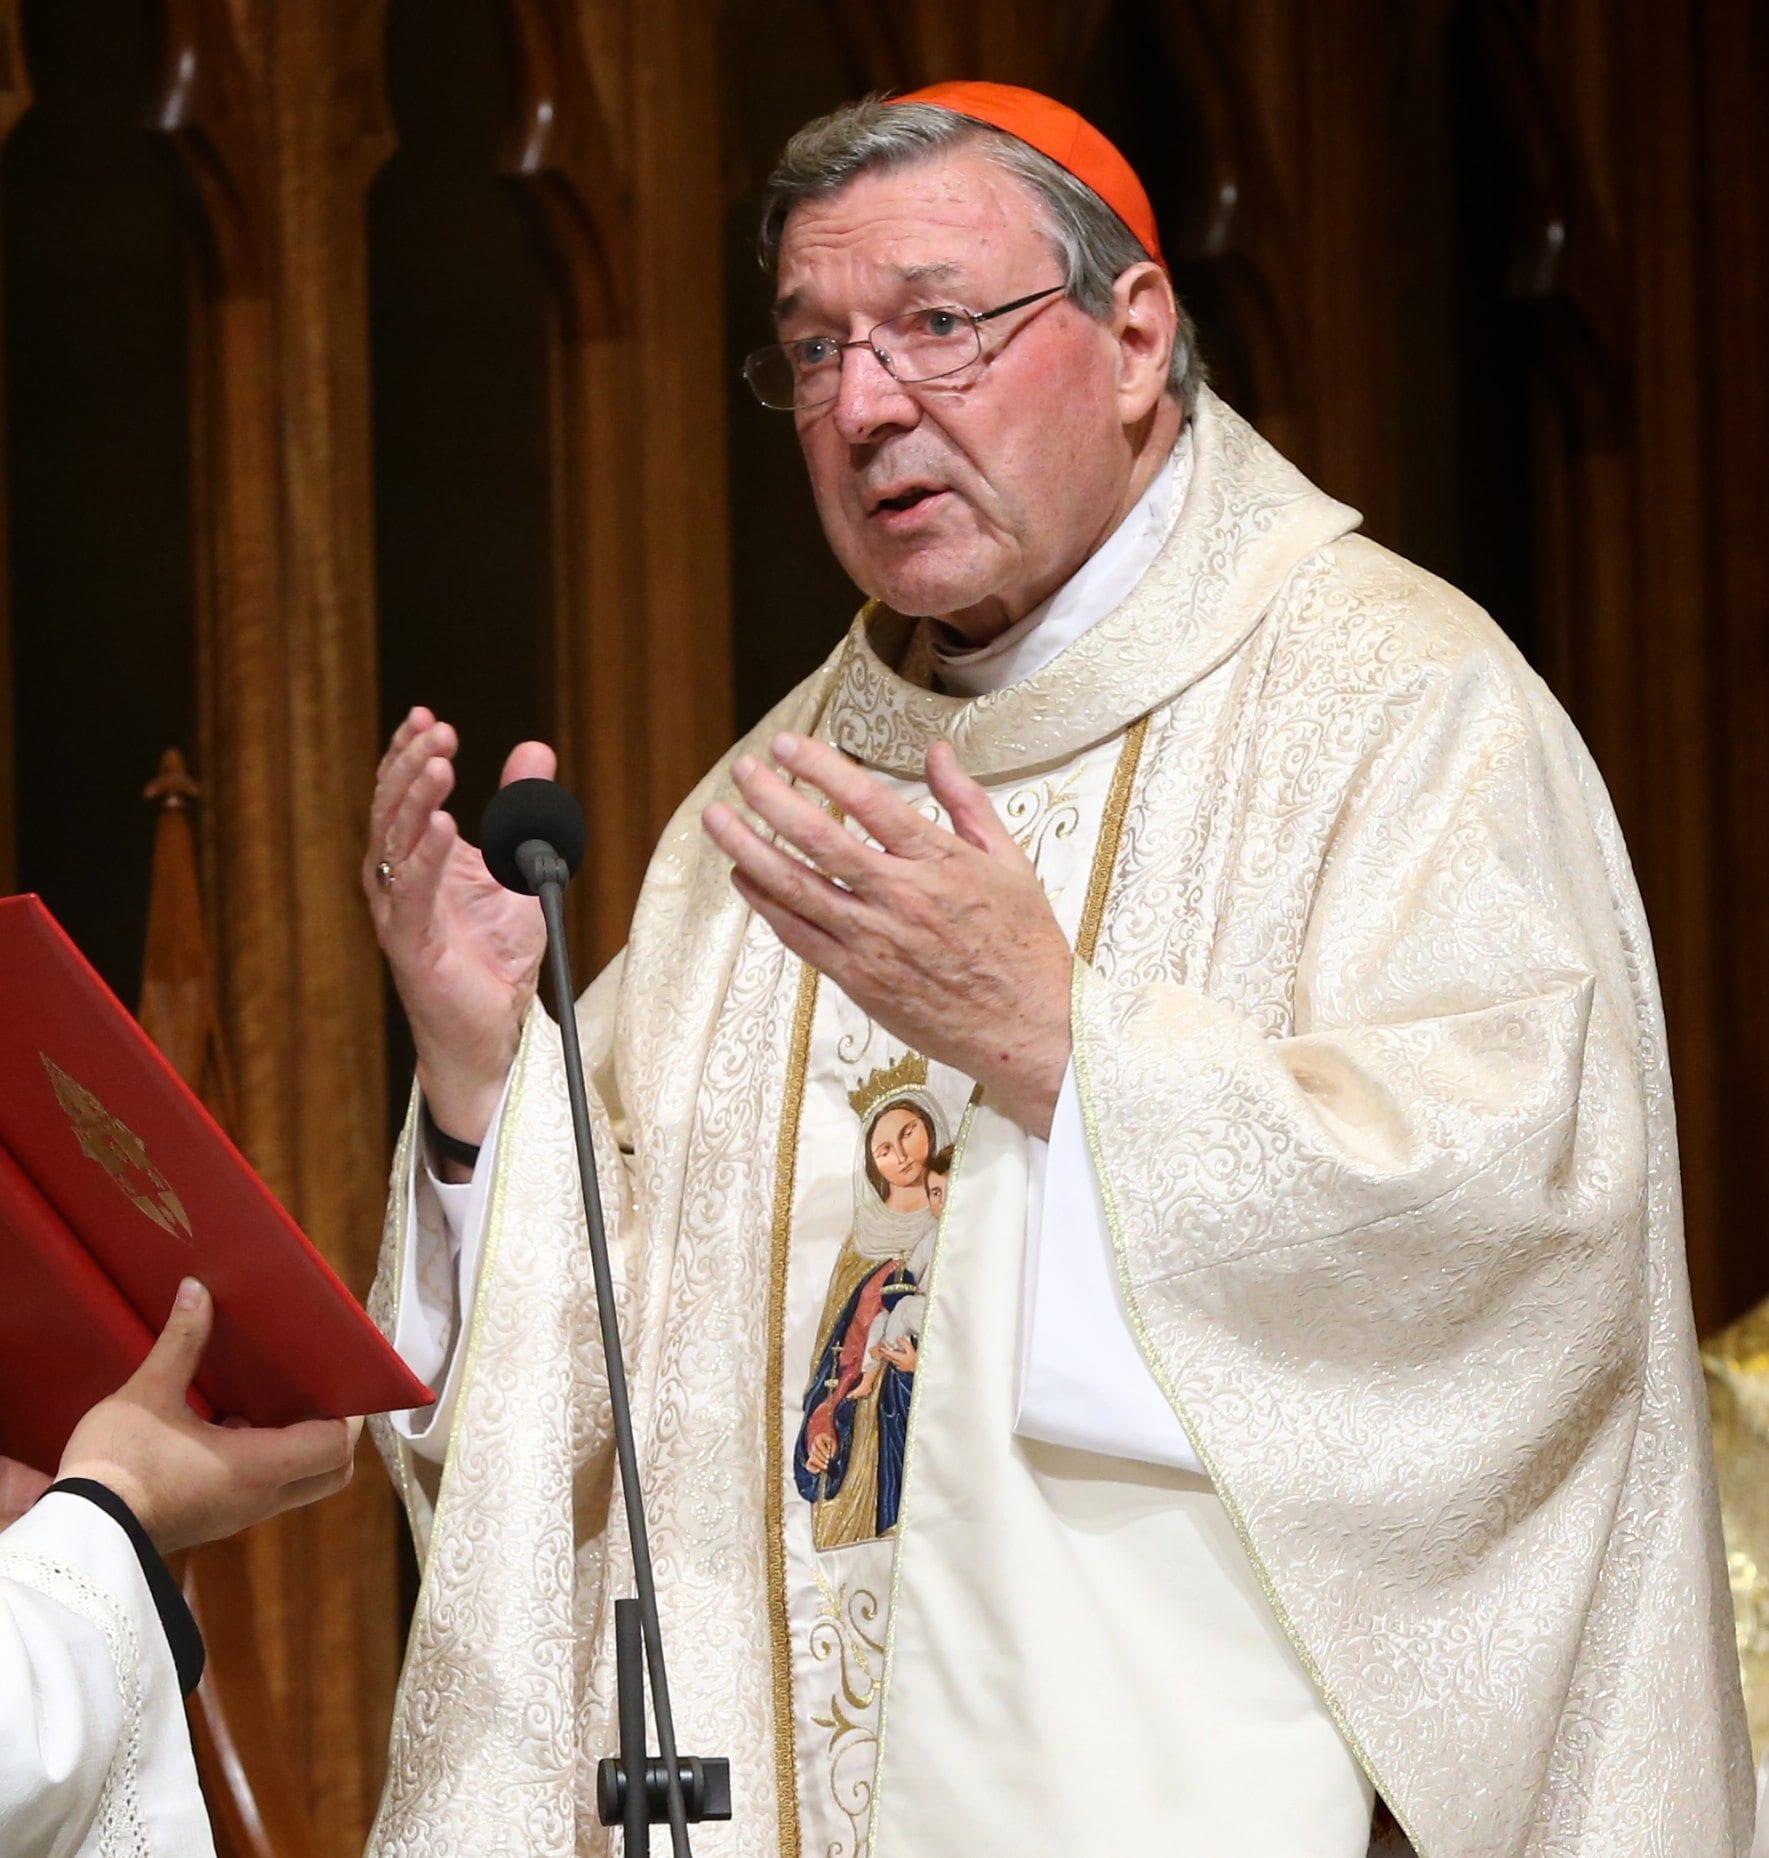 Australian police question Cardinal Pell in Rome